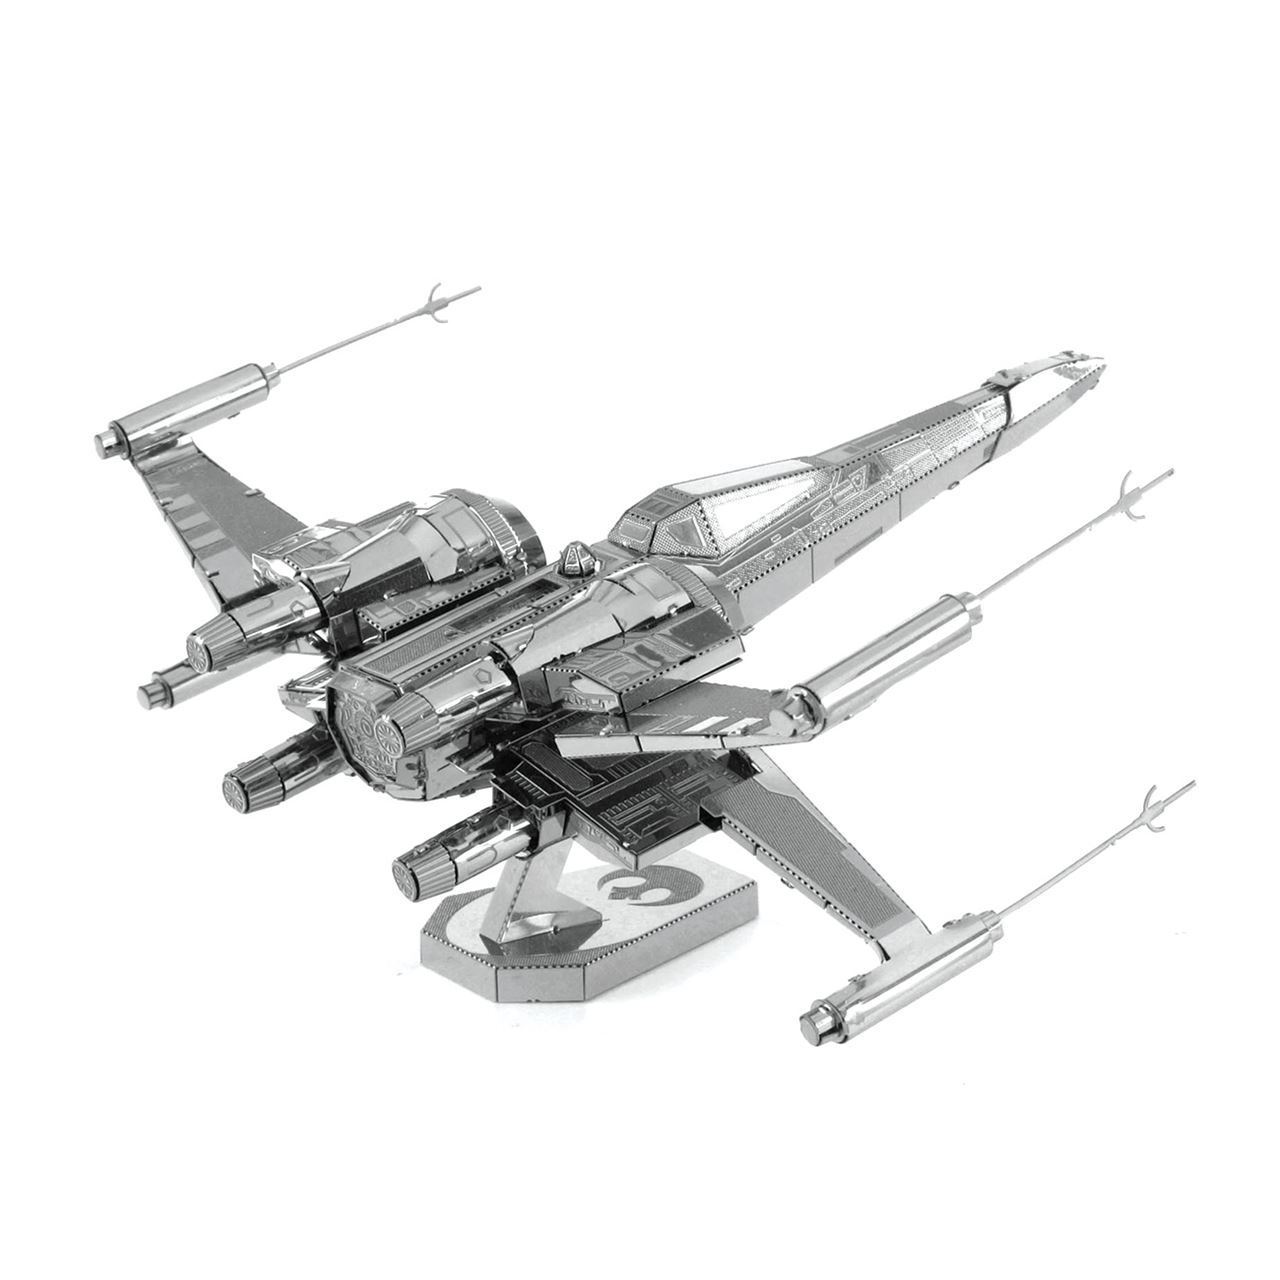 Fascinations Metal Earth Star Wars Poe Dameron's X-wing 3d Model Kit MMS269 for sale online 